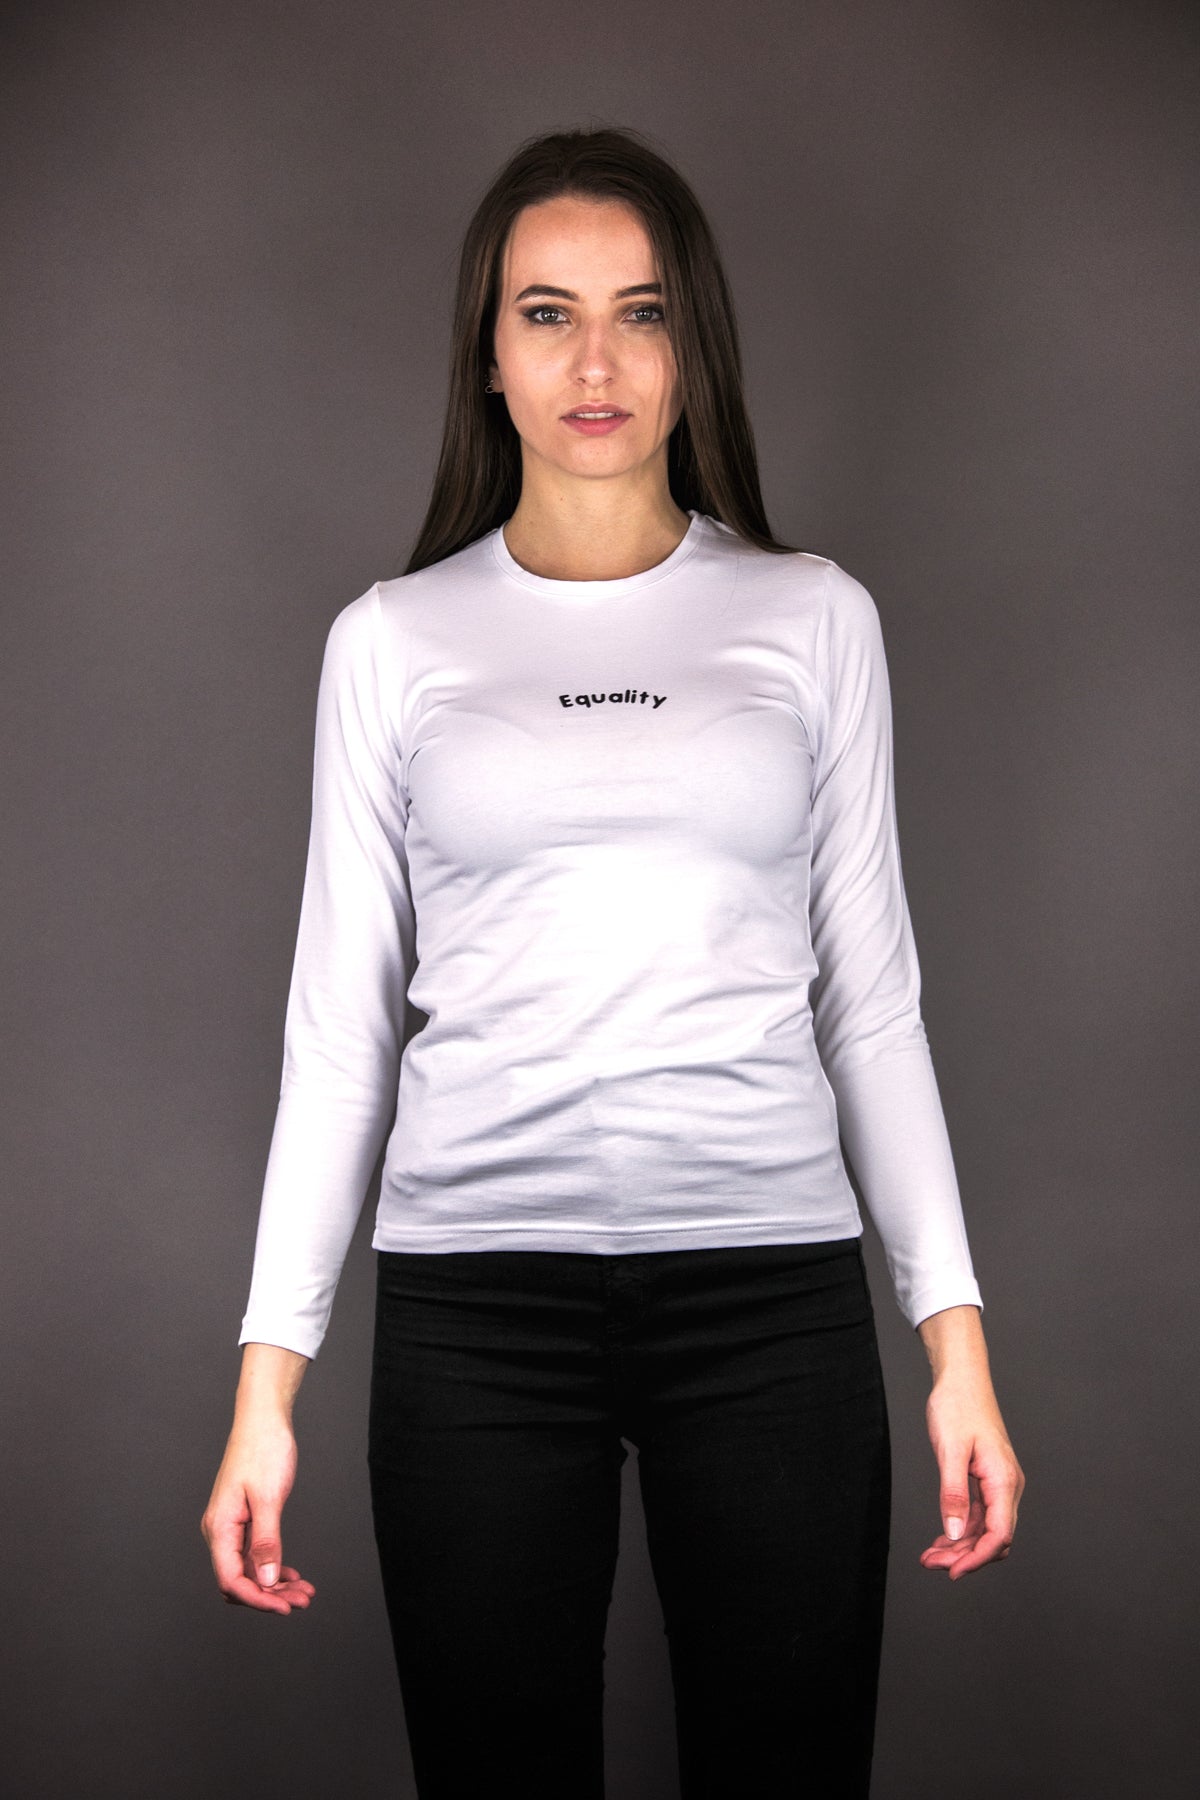 Longsleeve T-Shirt "EQUALITY" - white - Manuel Essl Design